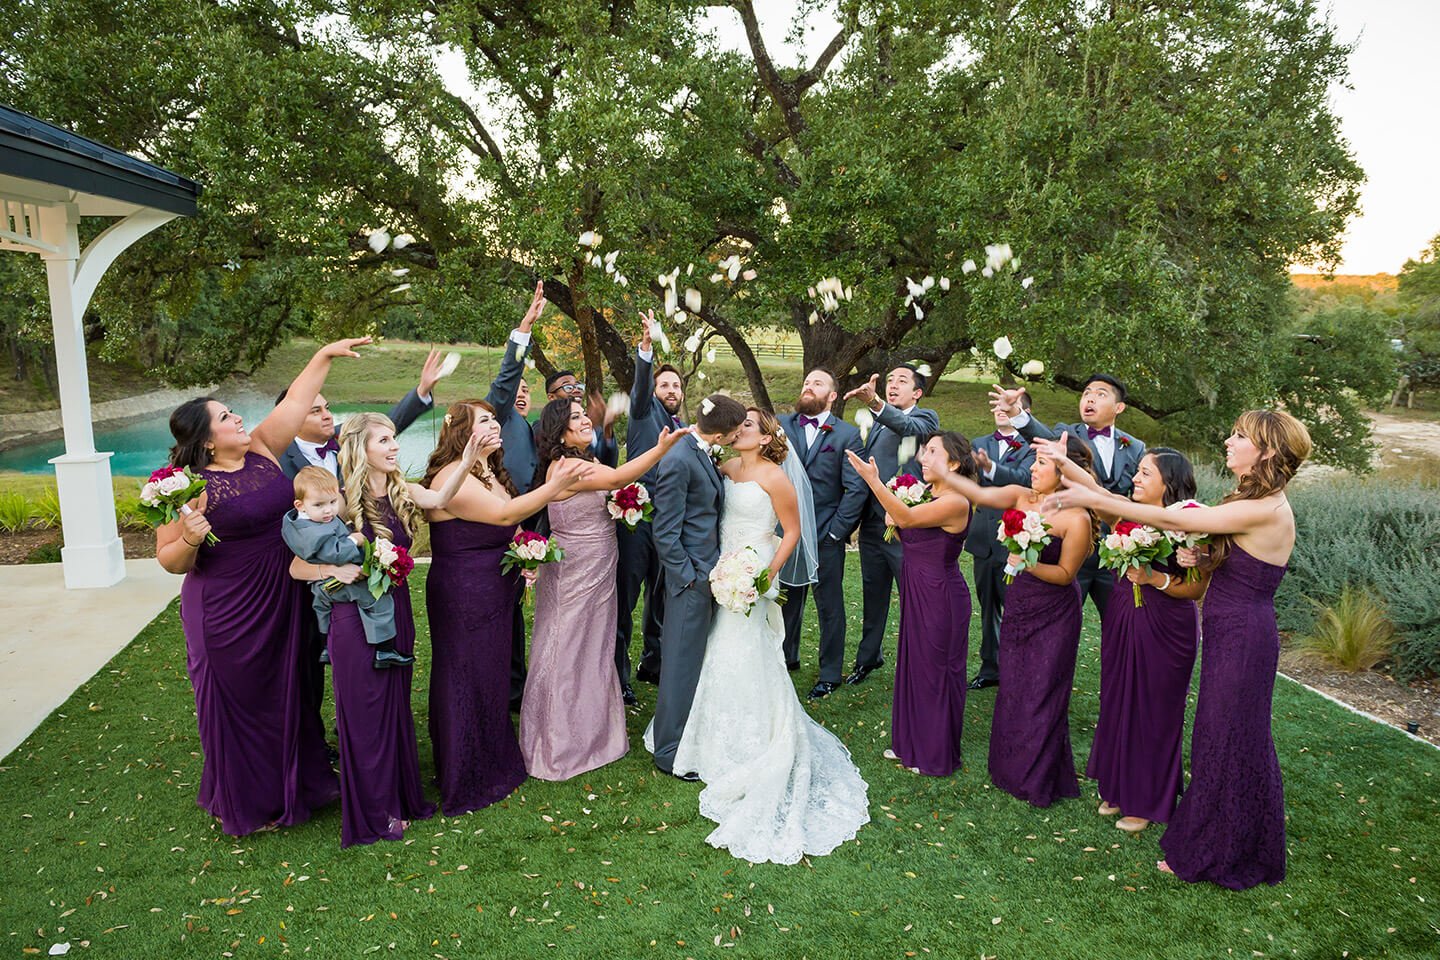 Sun Gold Photography-BridalBuzz-San Antonio Weddings